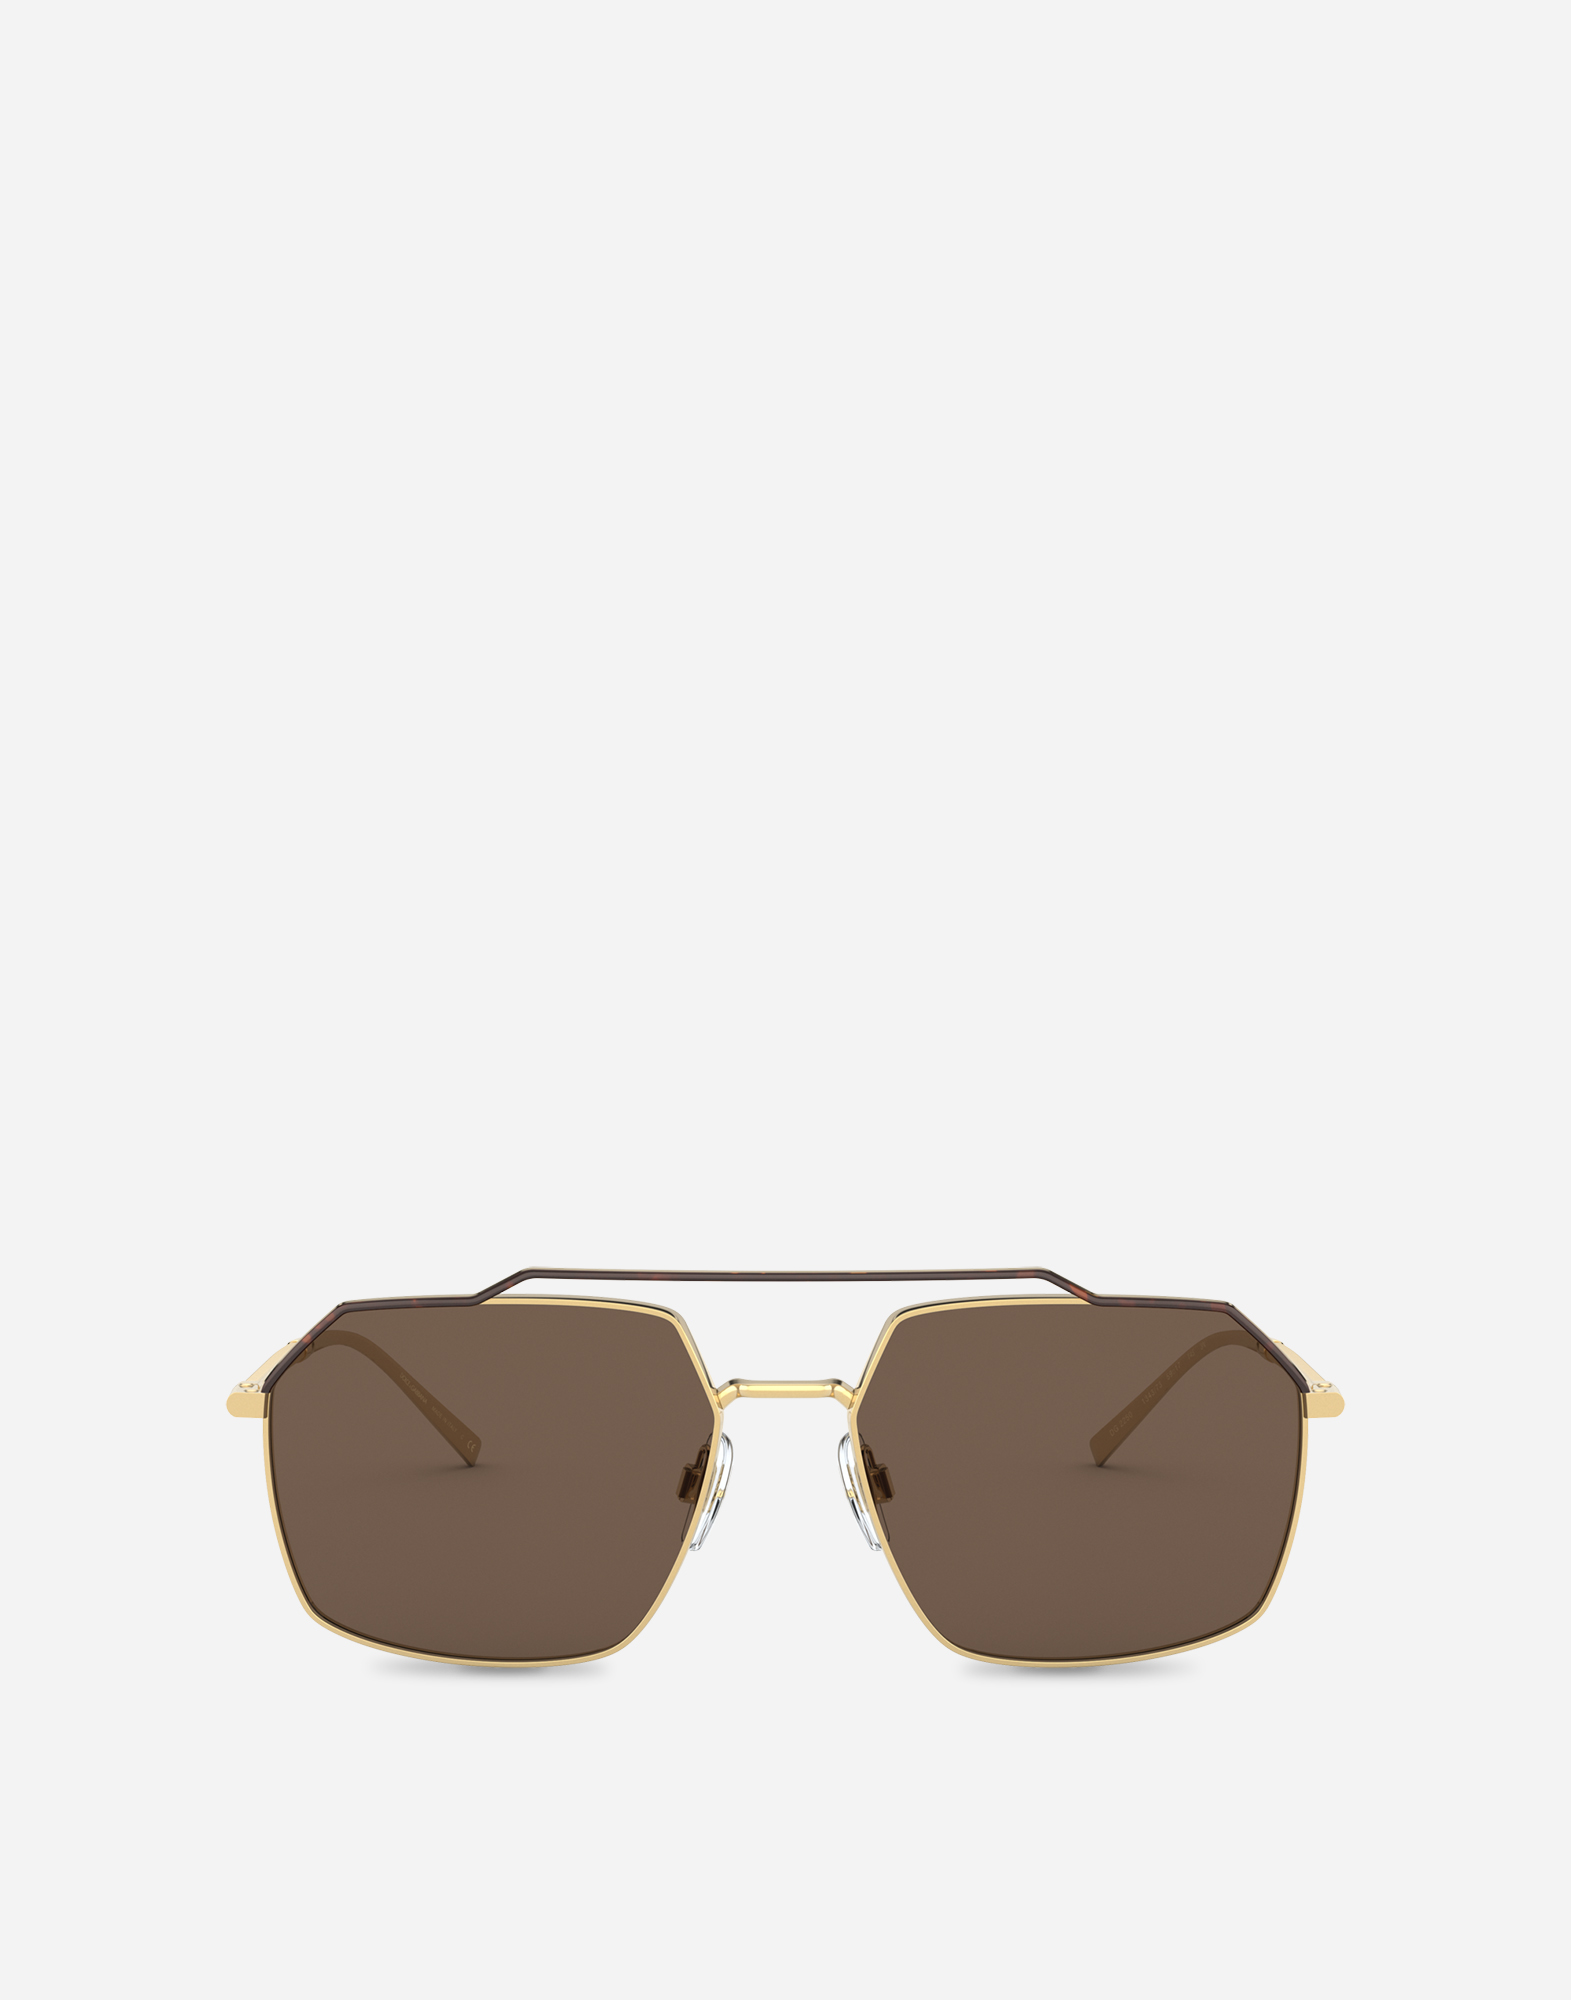 Gros grain sunglasses in Gold and Havana